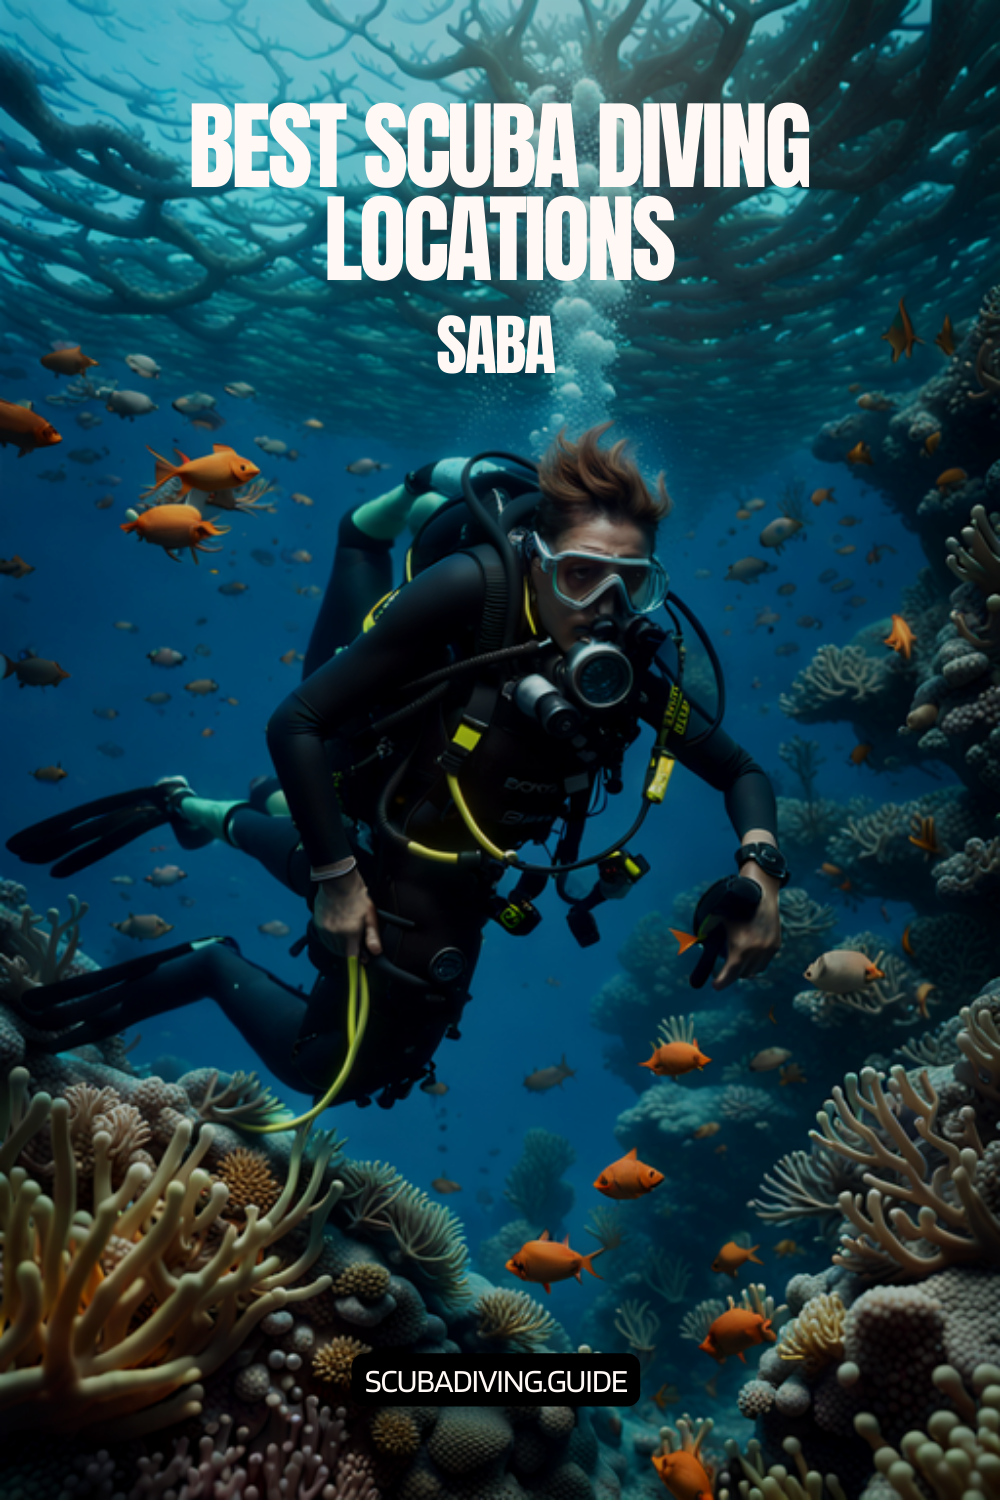 Scuba Diving Locations in Saba